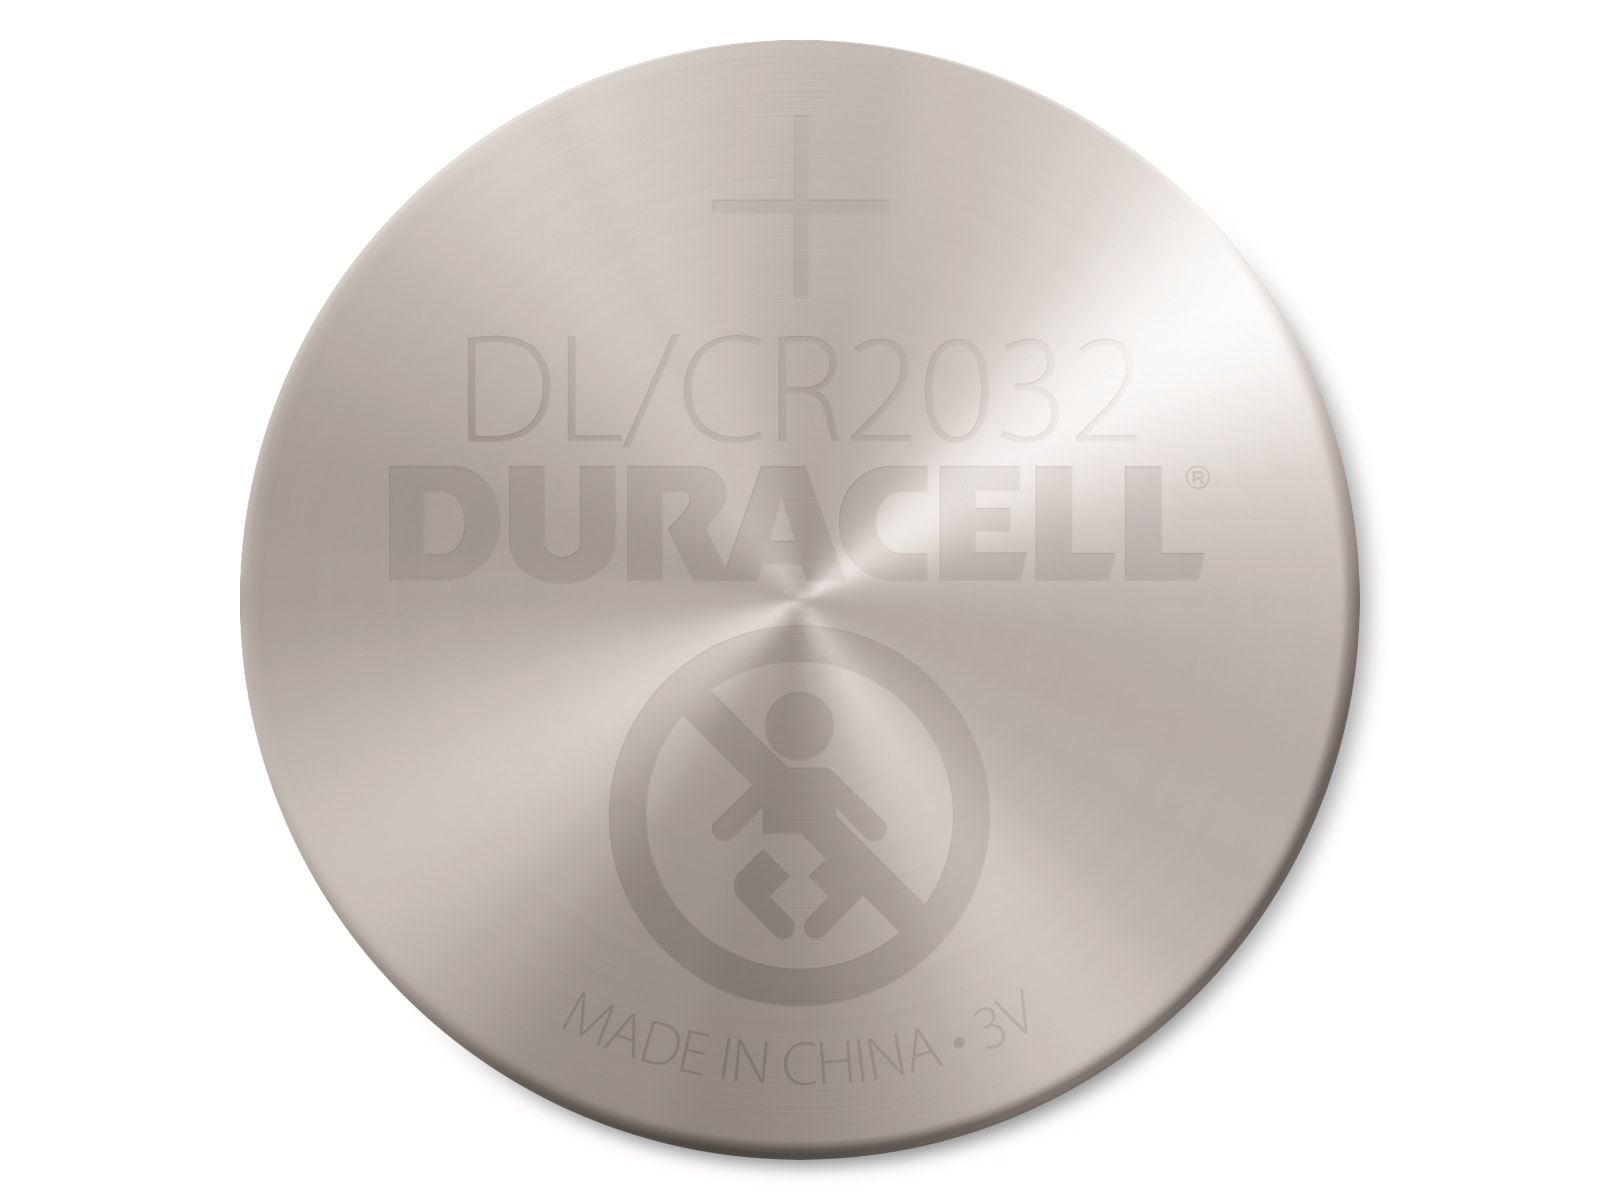 DURACELL Lithium-Knopfzelle CR2032, 3V, 5 Stück Lithium Batterien